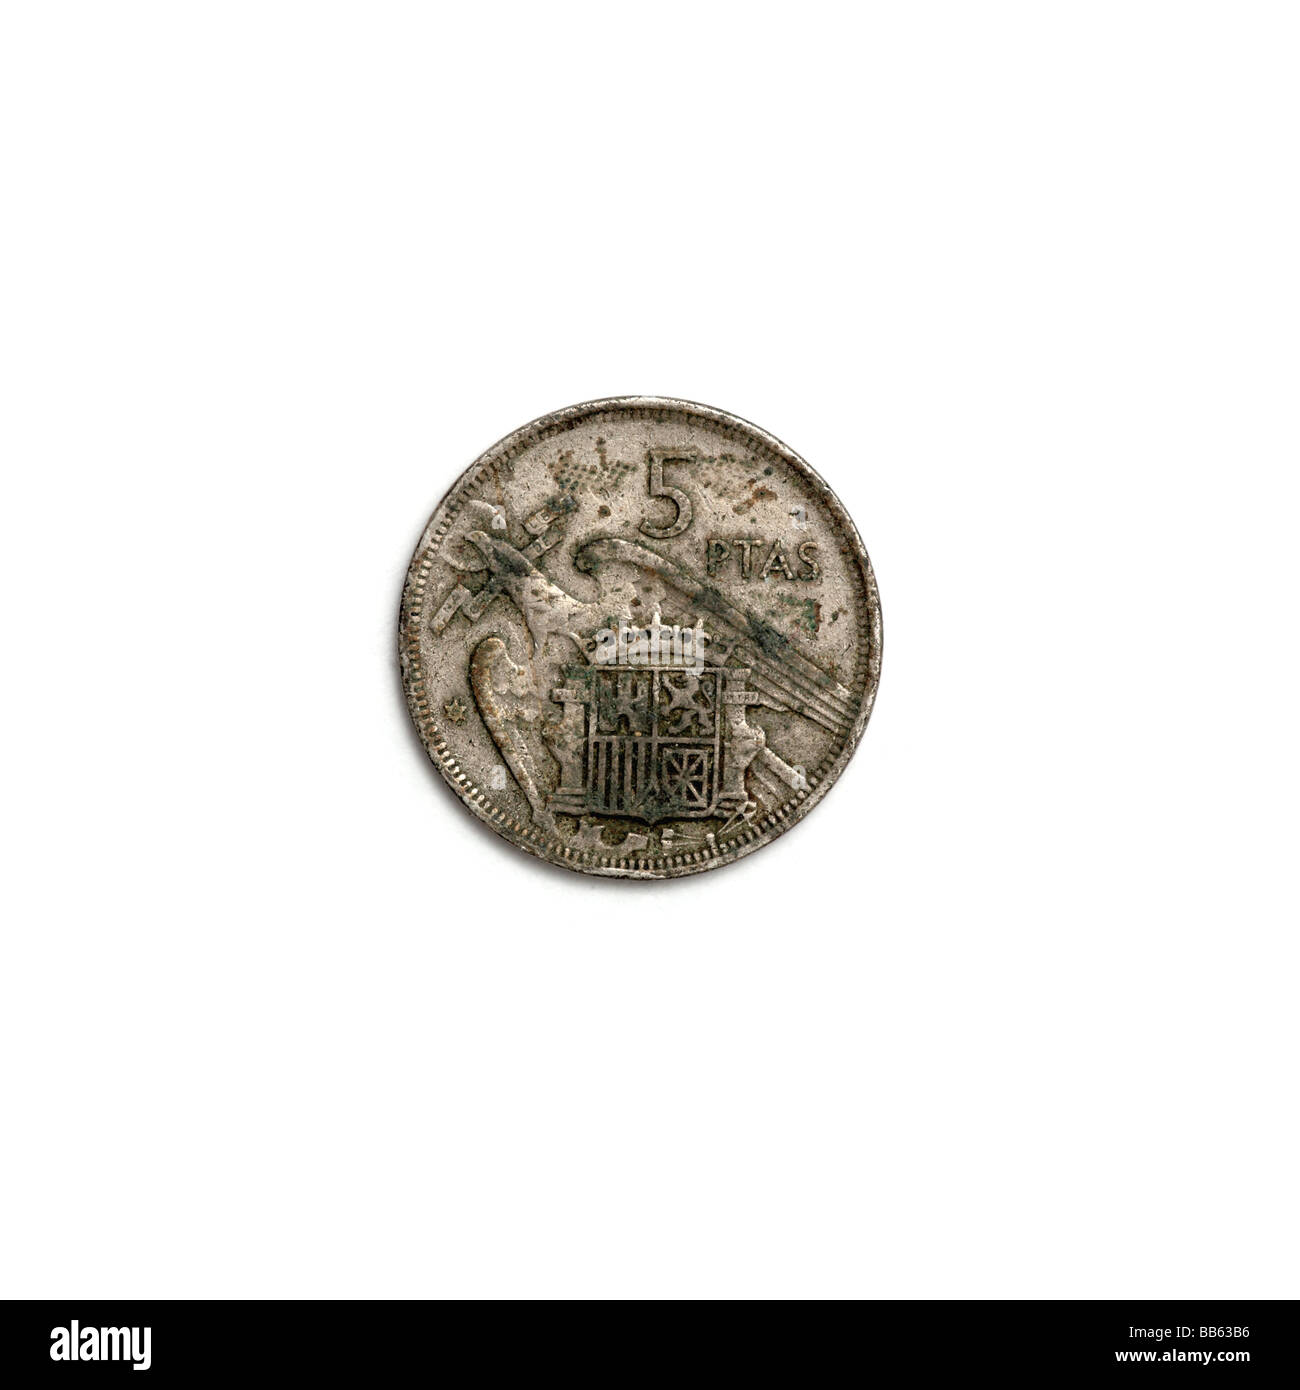 Old Spanish 5 peseta coin - Franco era Stock Photo